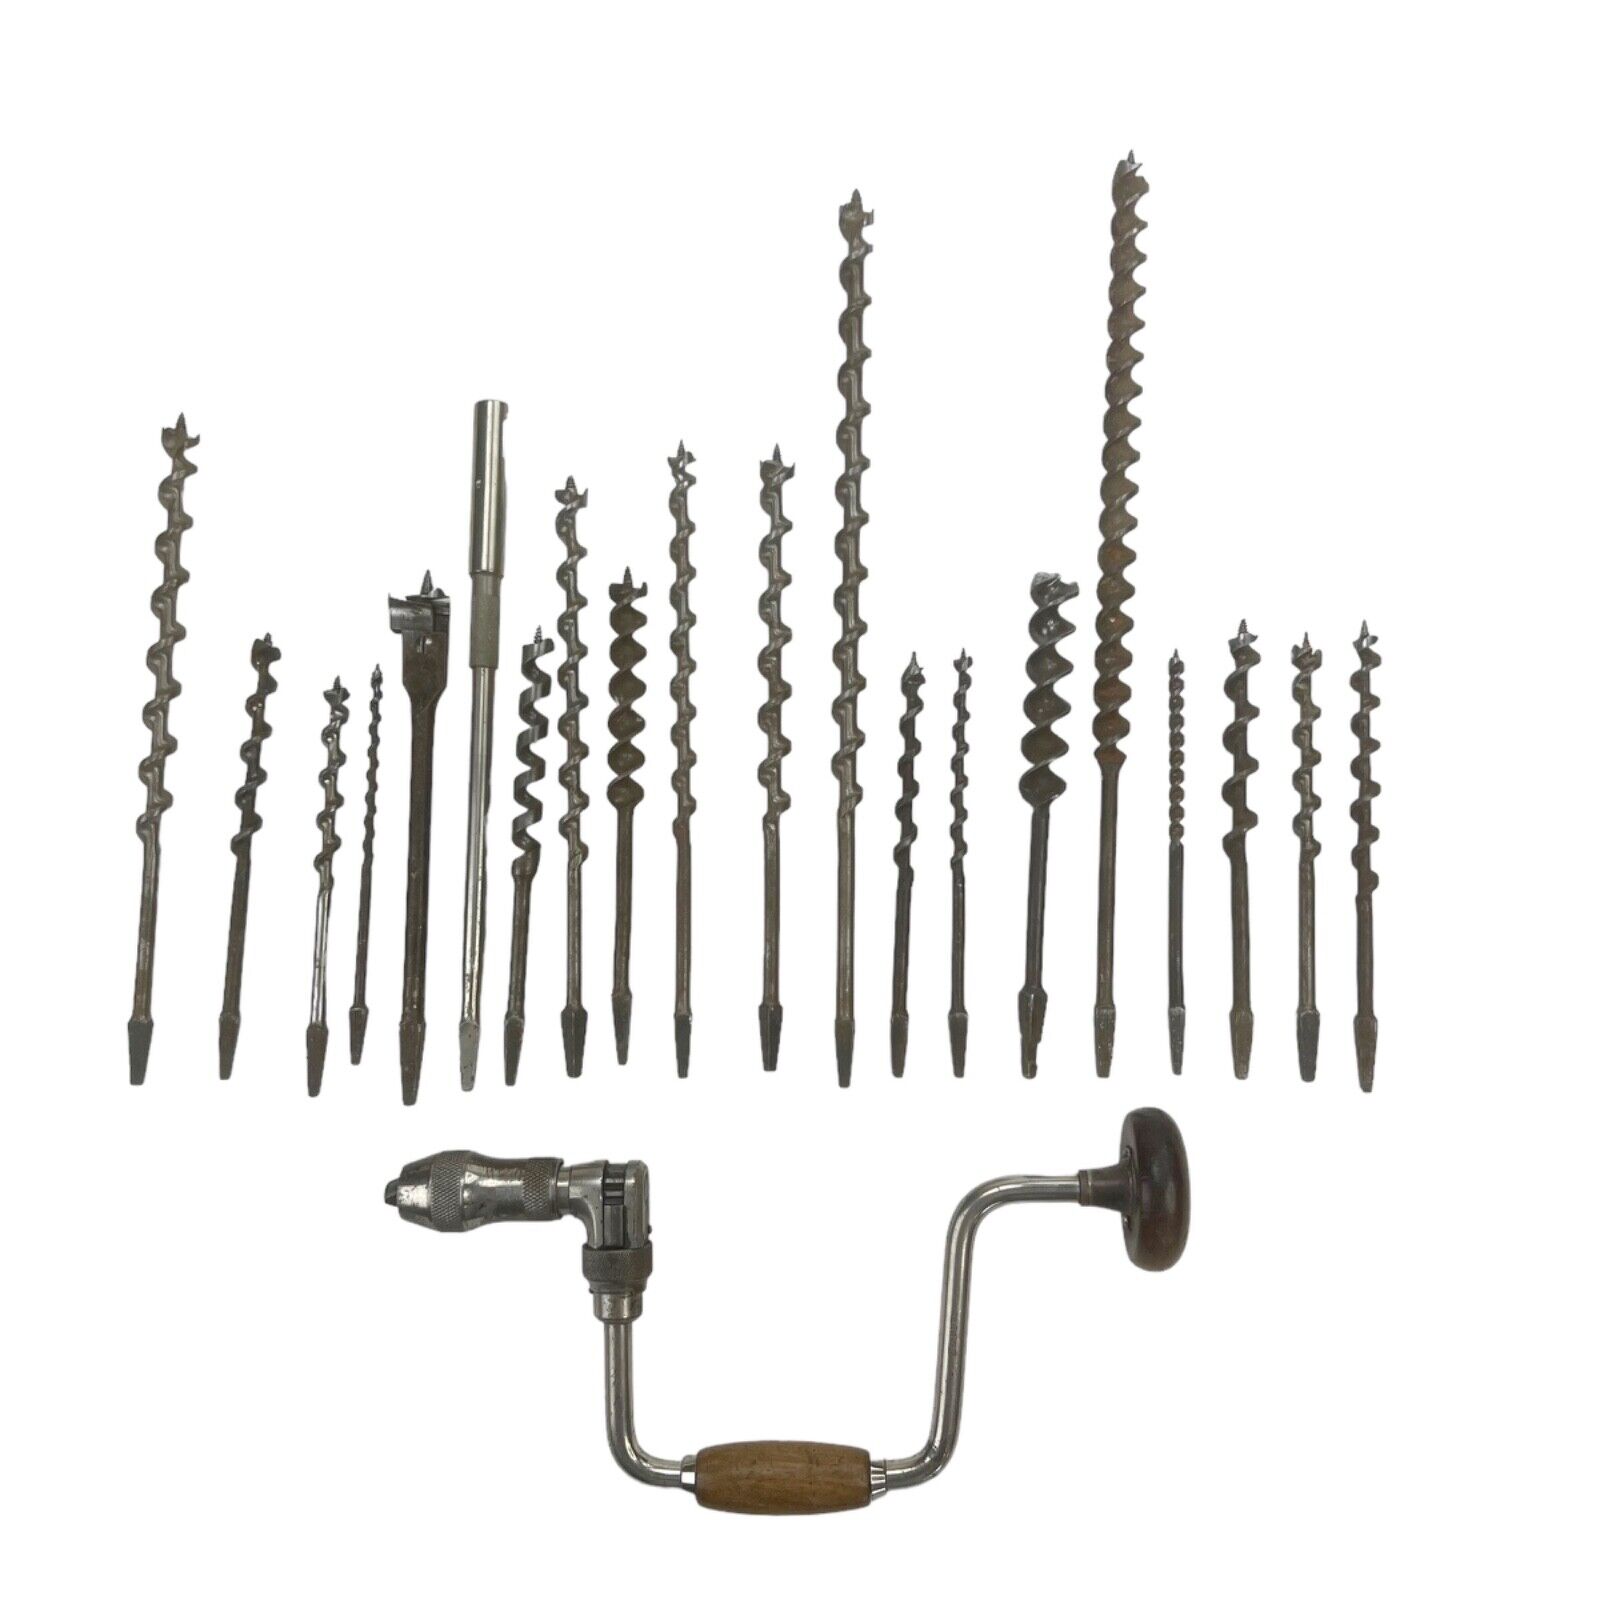 Vintage Stanley 10” Sweep No 945A Bit Brace Hand Drill & Assorted Bit Set Lot